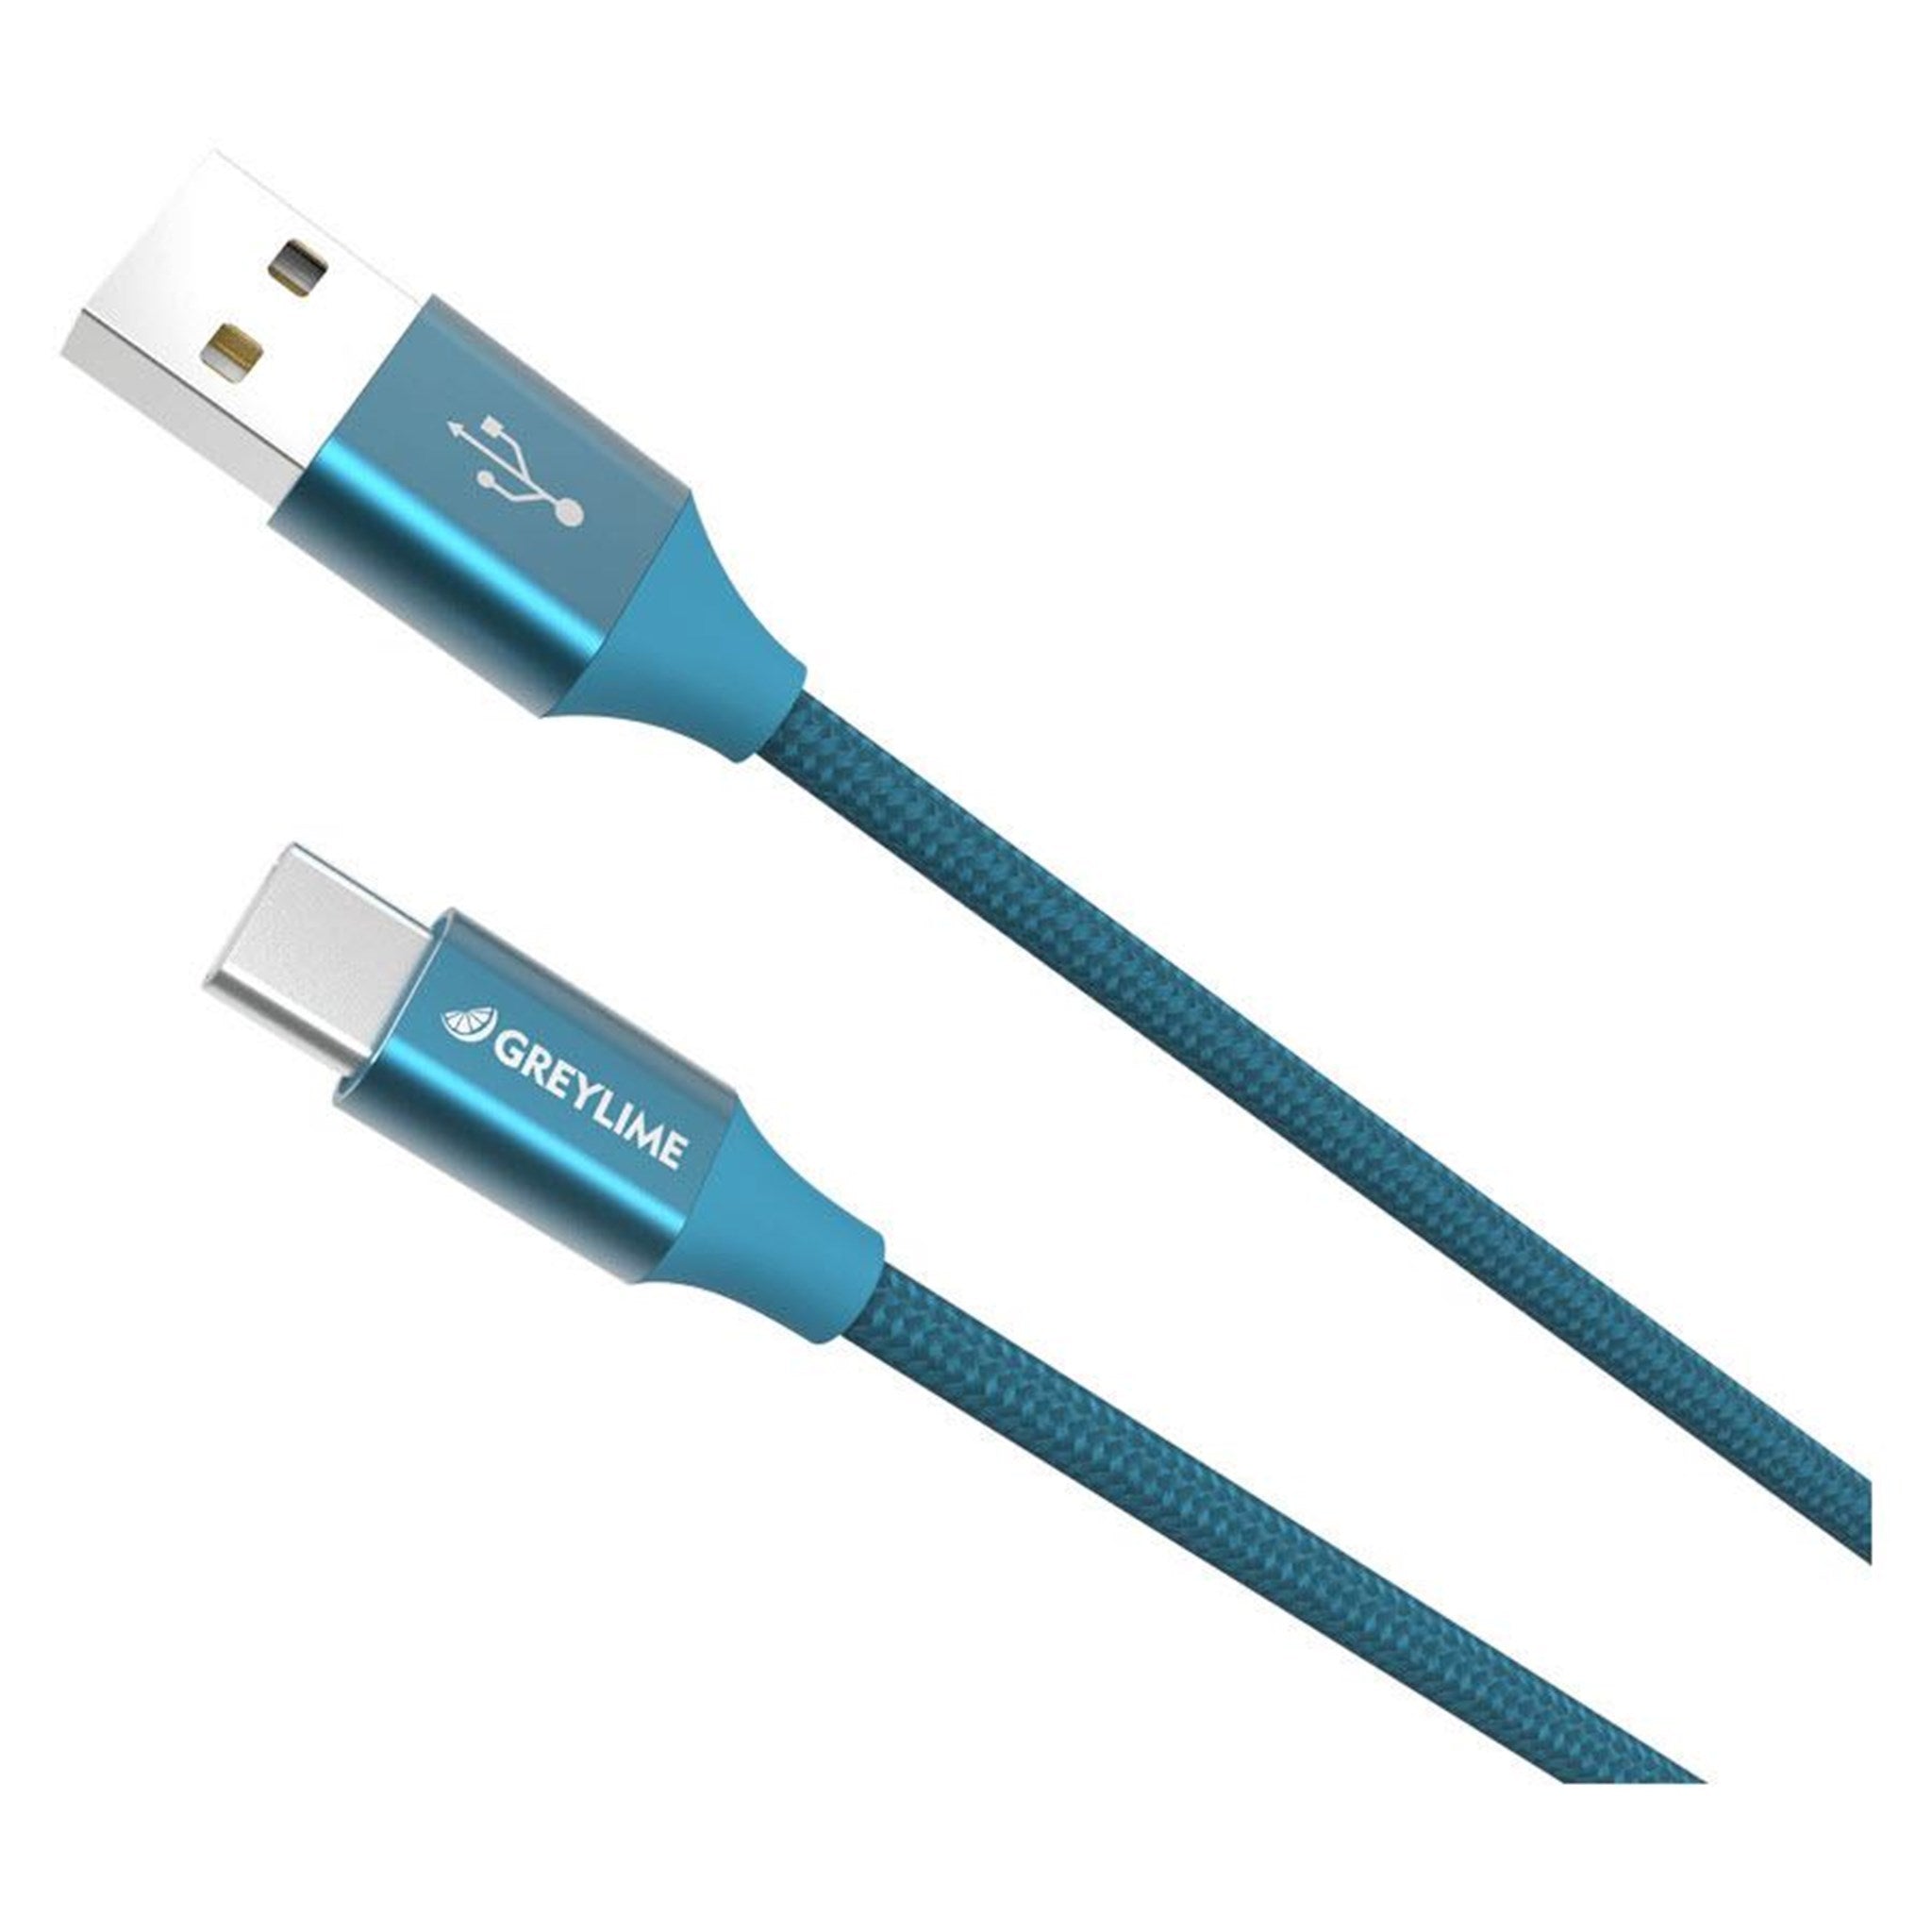 C21AC2M01-GreyLime-Braided-USB-A-to-USB-C-Cable-Blå-2-m_02.jpg